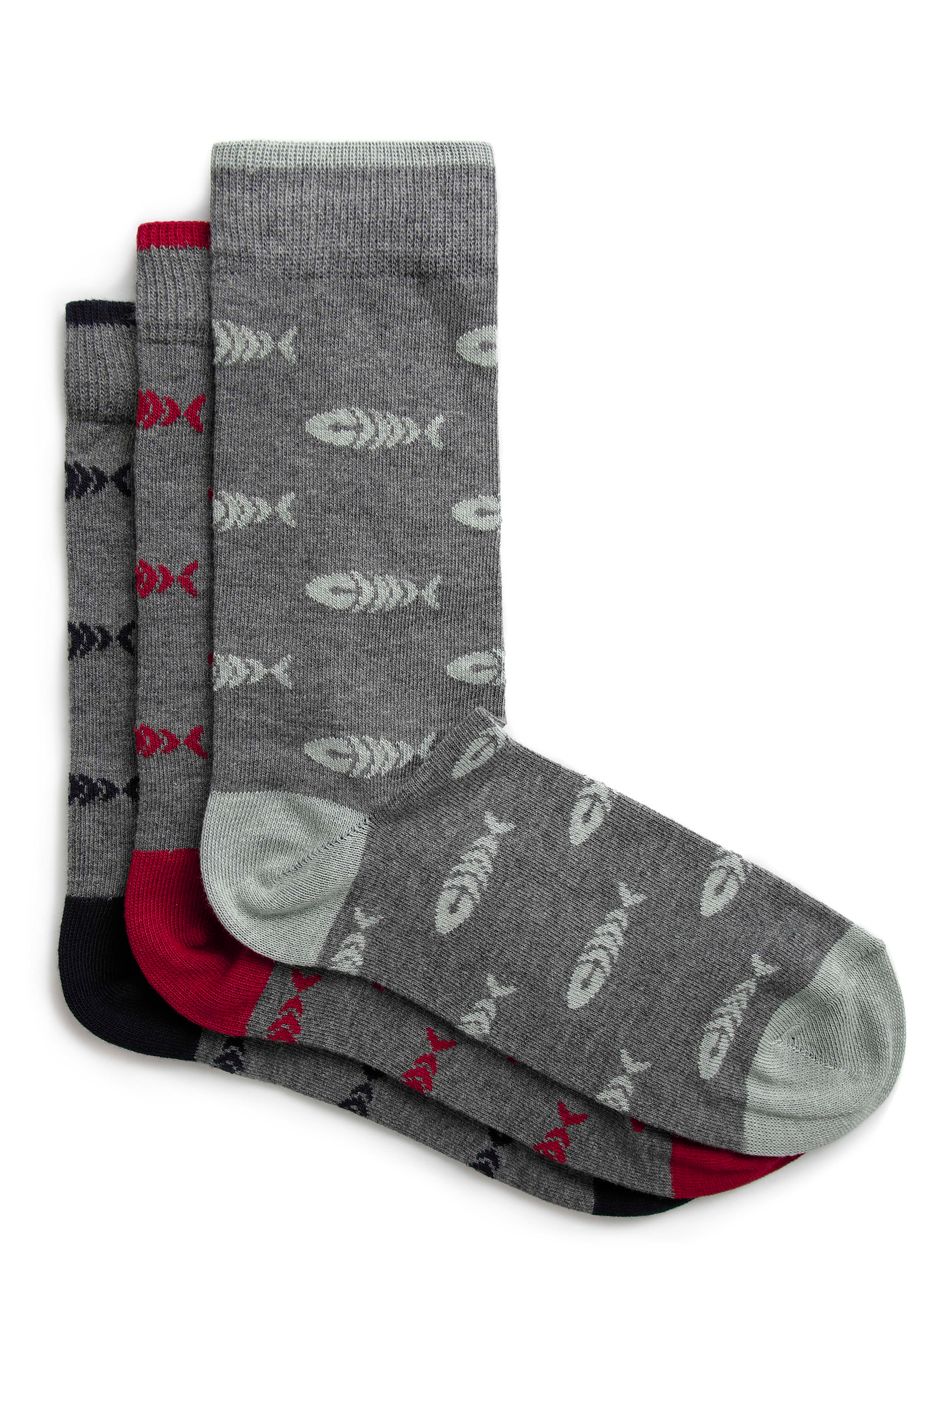 Ronan Organic Branded Socks 3 Pack Grey